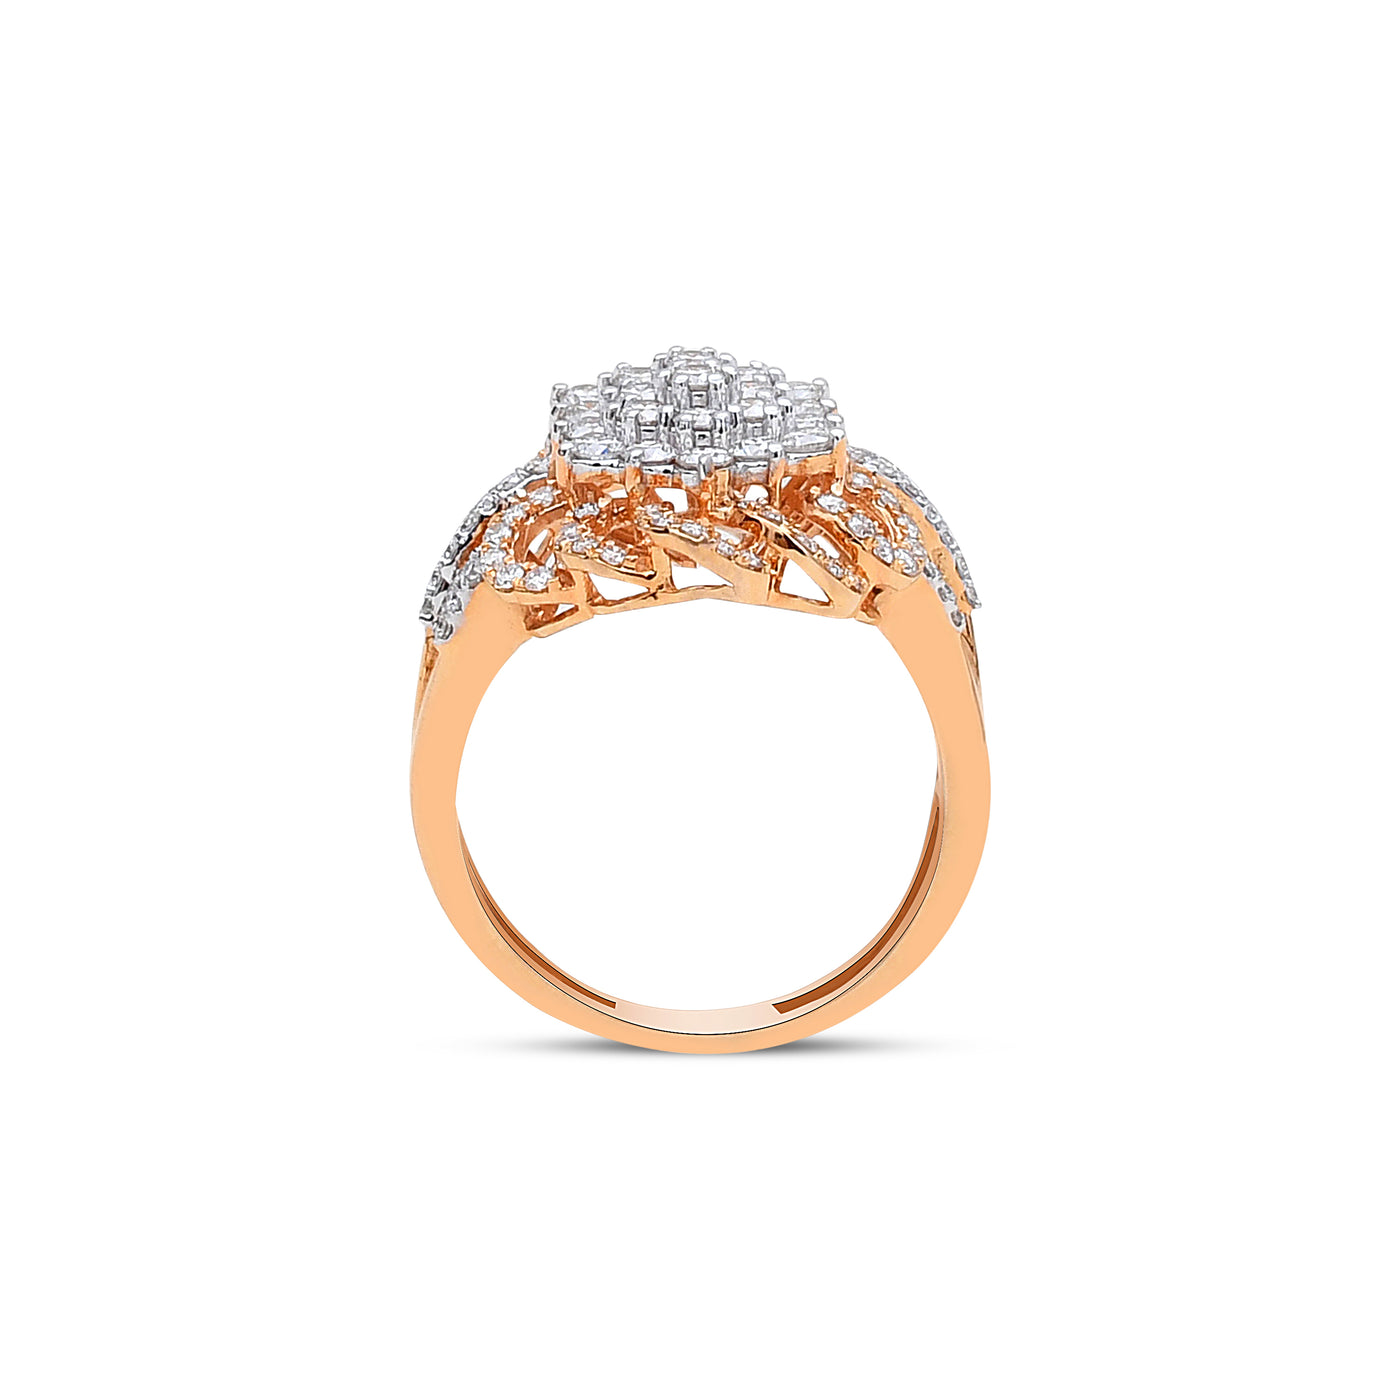 The Empress Diamond Ring